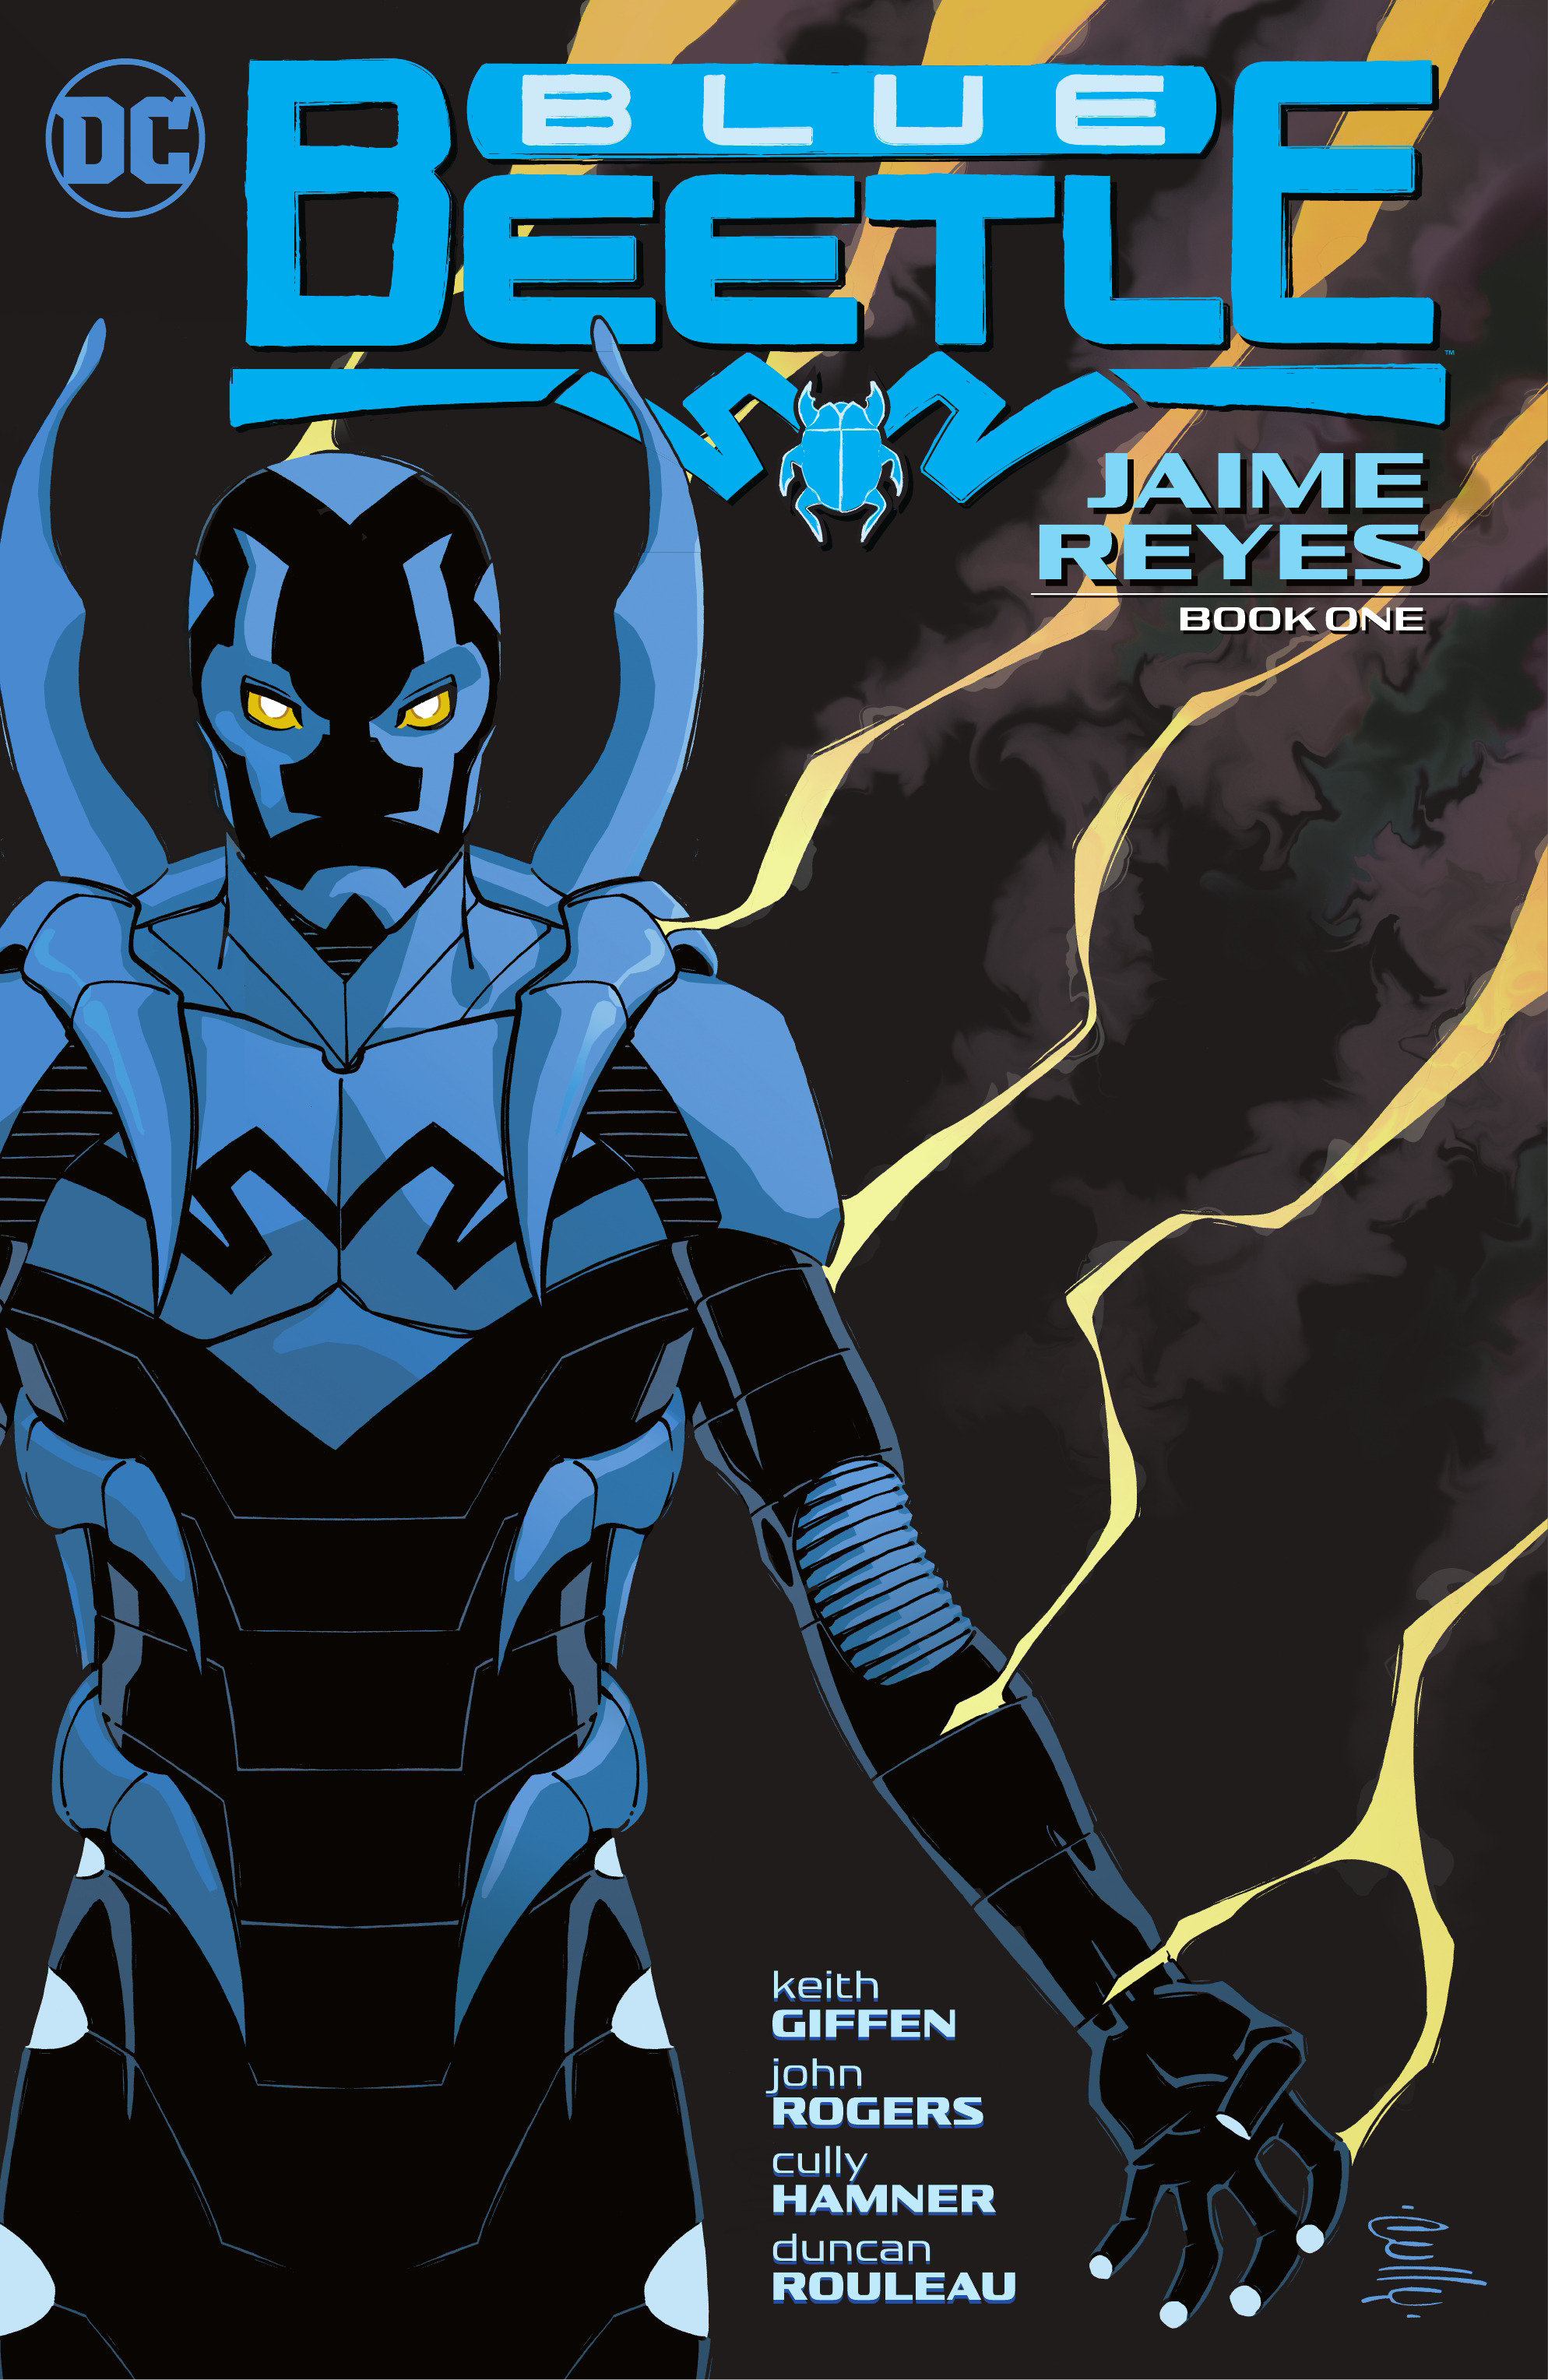 Blue Beetle Jaime Reyes Graphic Novel Book 1